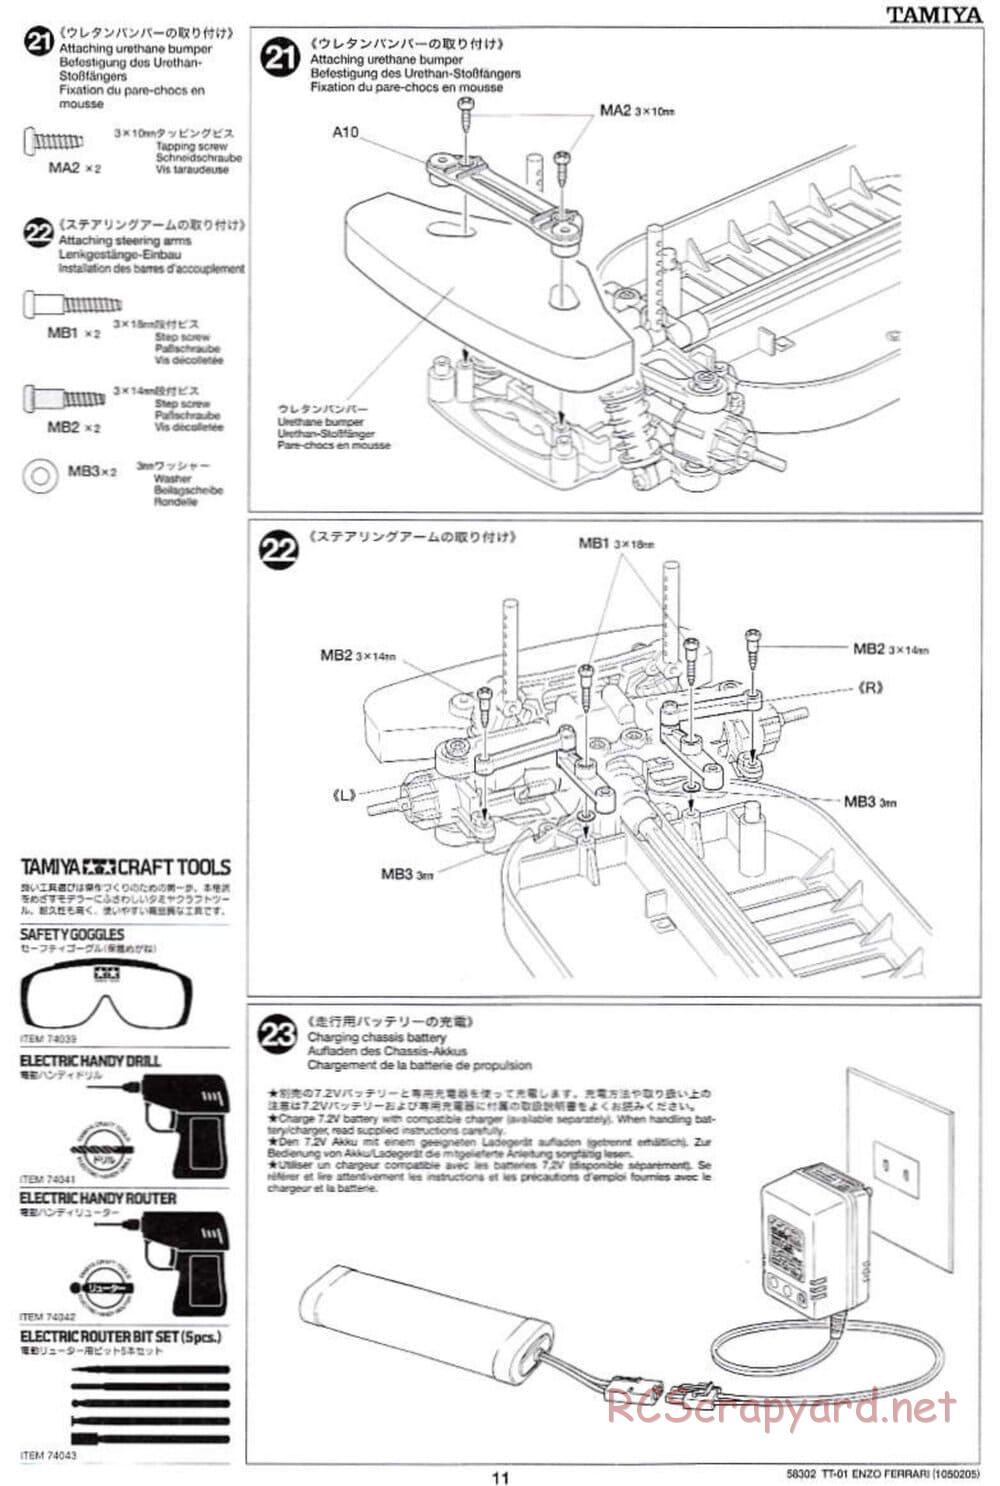 Tamiya - Enzo Ferrari - TT-01 Chassis - Manual - Page 11